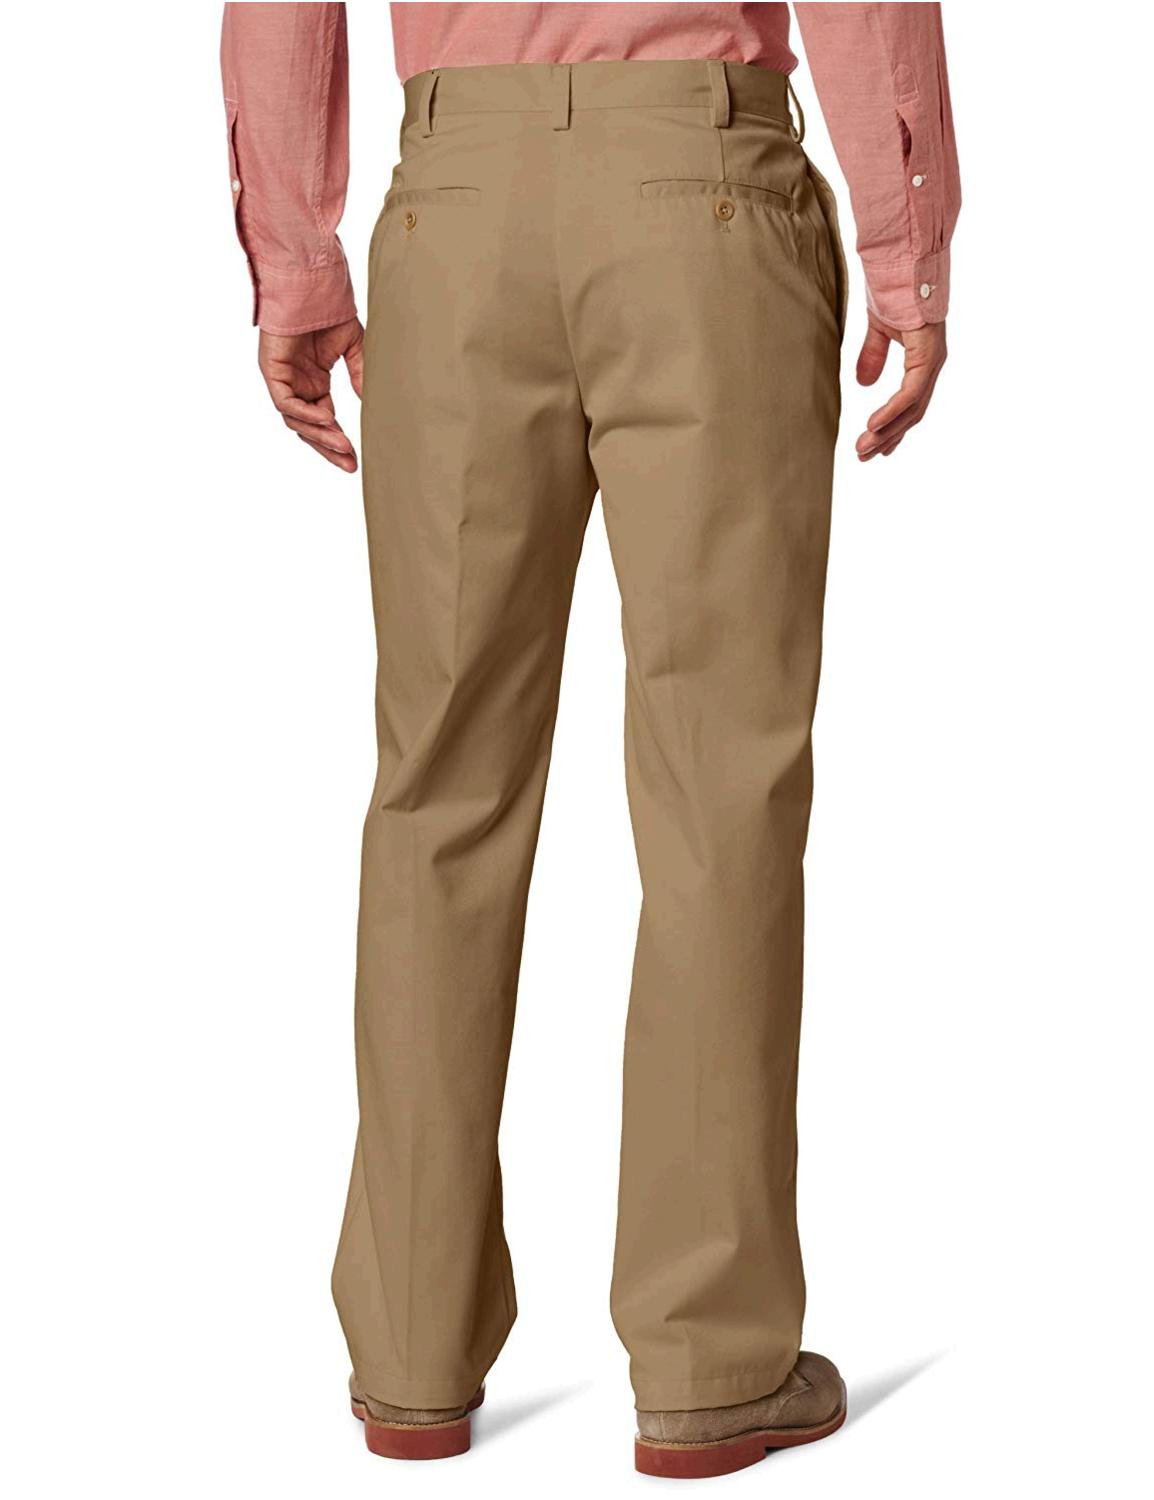 IZOD Men's American Chino Flat Front Pant,, English Khaki, Size 36W x ...